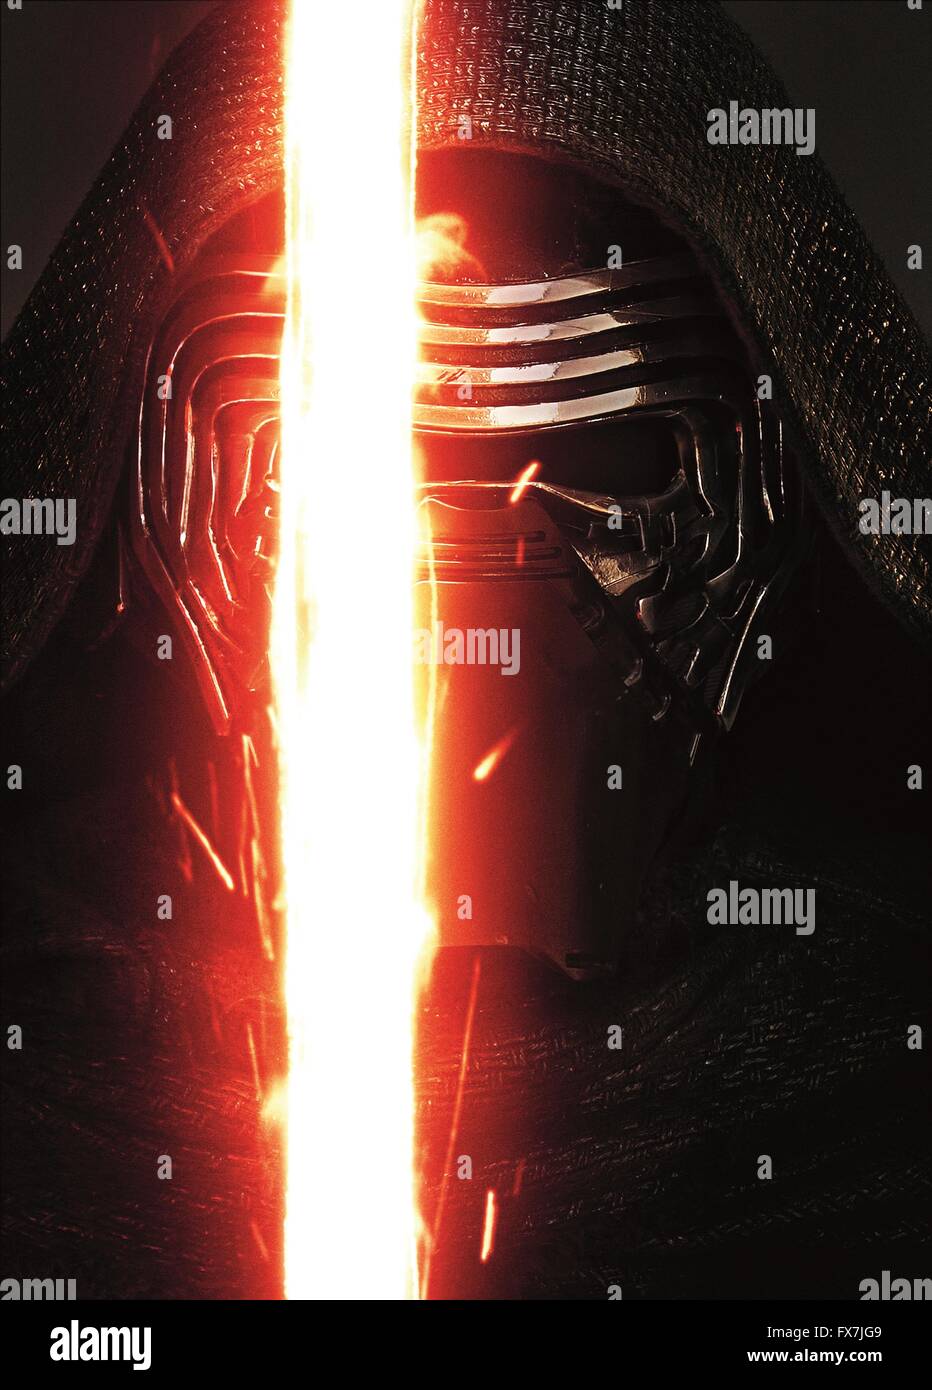 Star Wars: Episode VII - The Force Awakens Year : 2015 USA Director : J.J. Abrams Adam Driver Movie poster (Art Work) Stock Photo